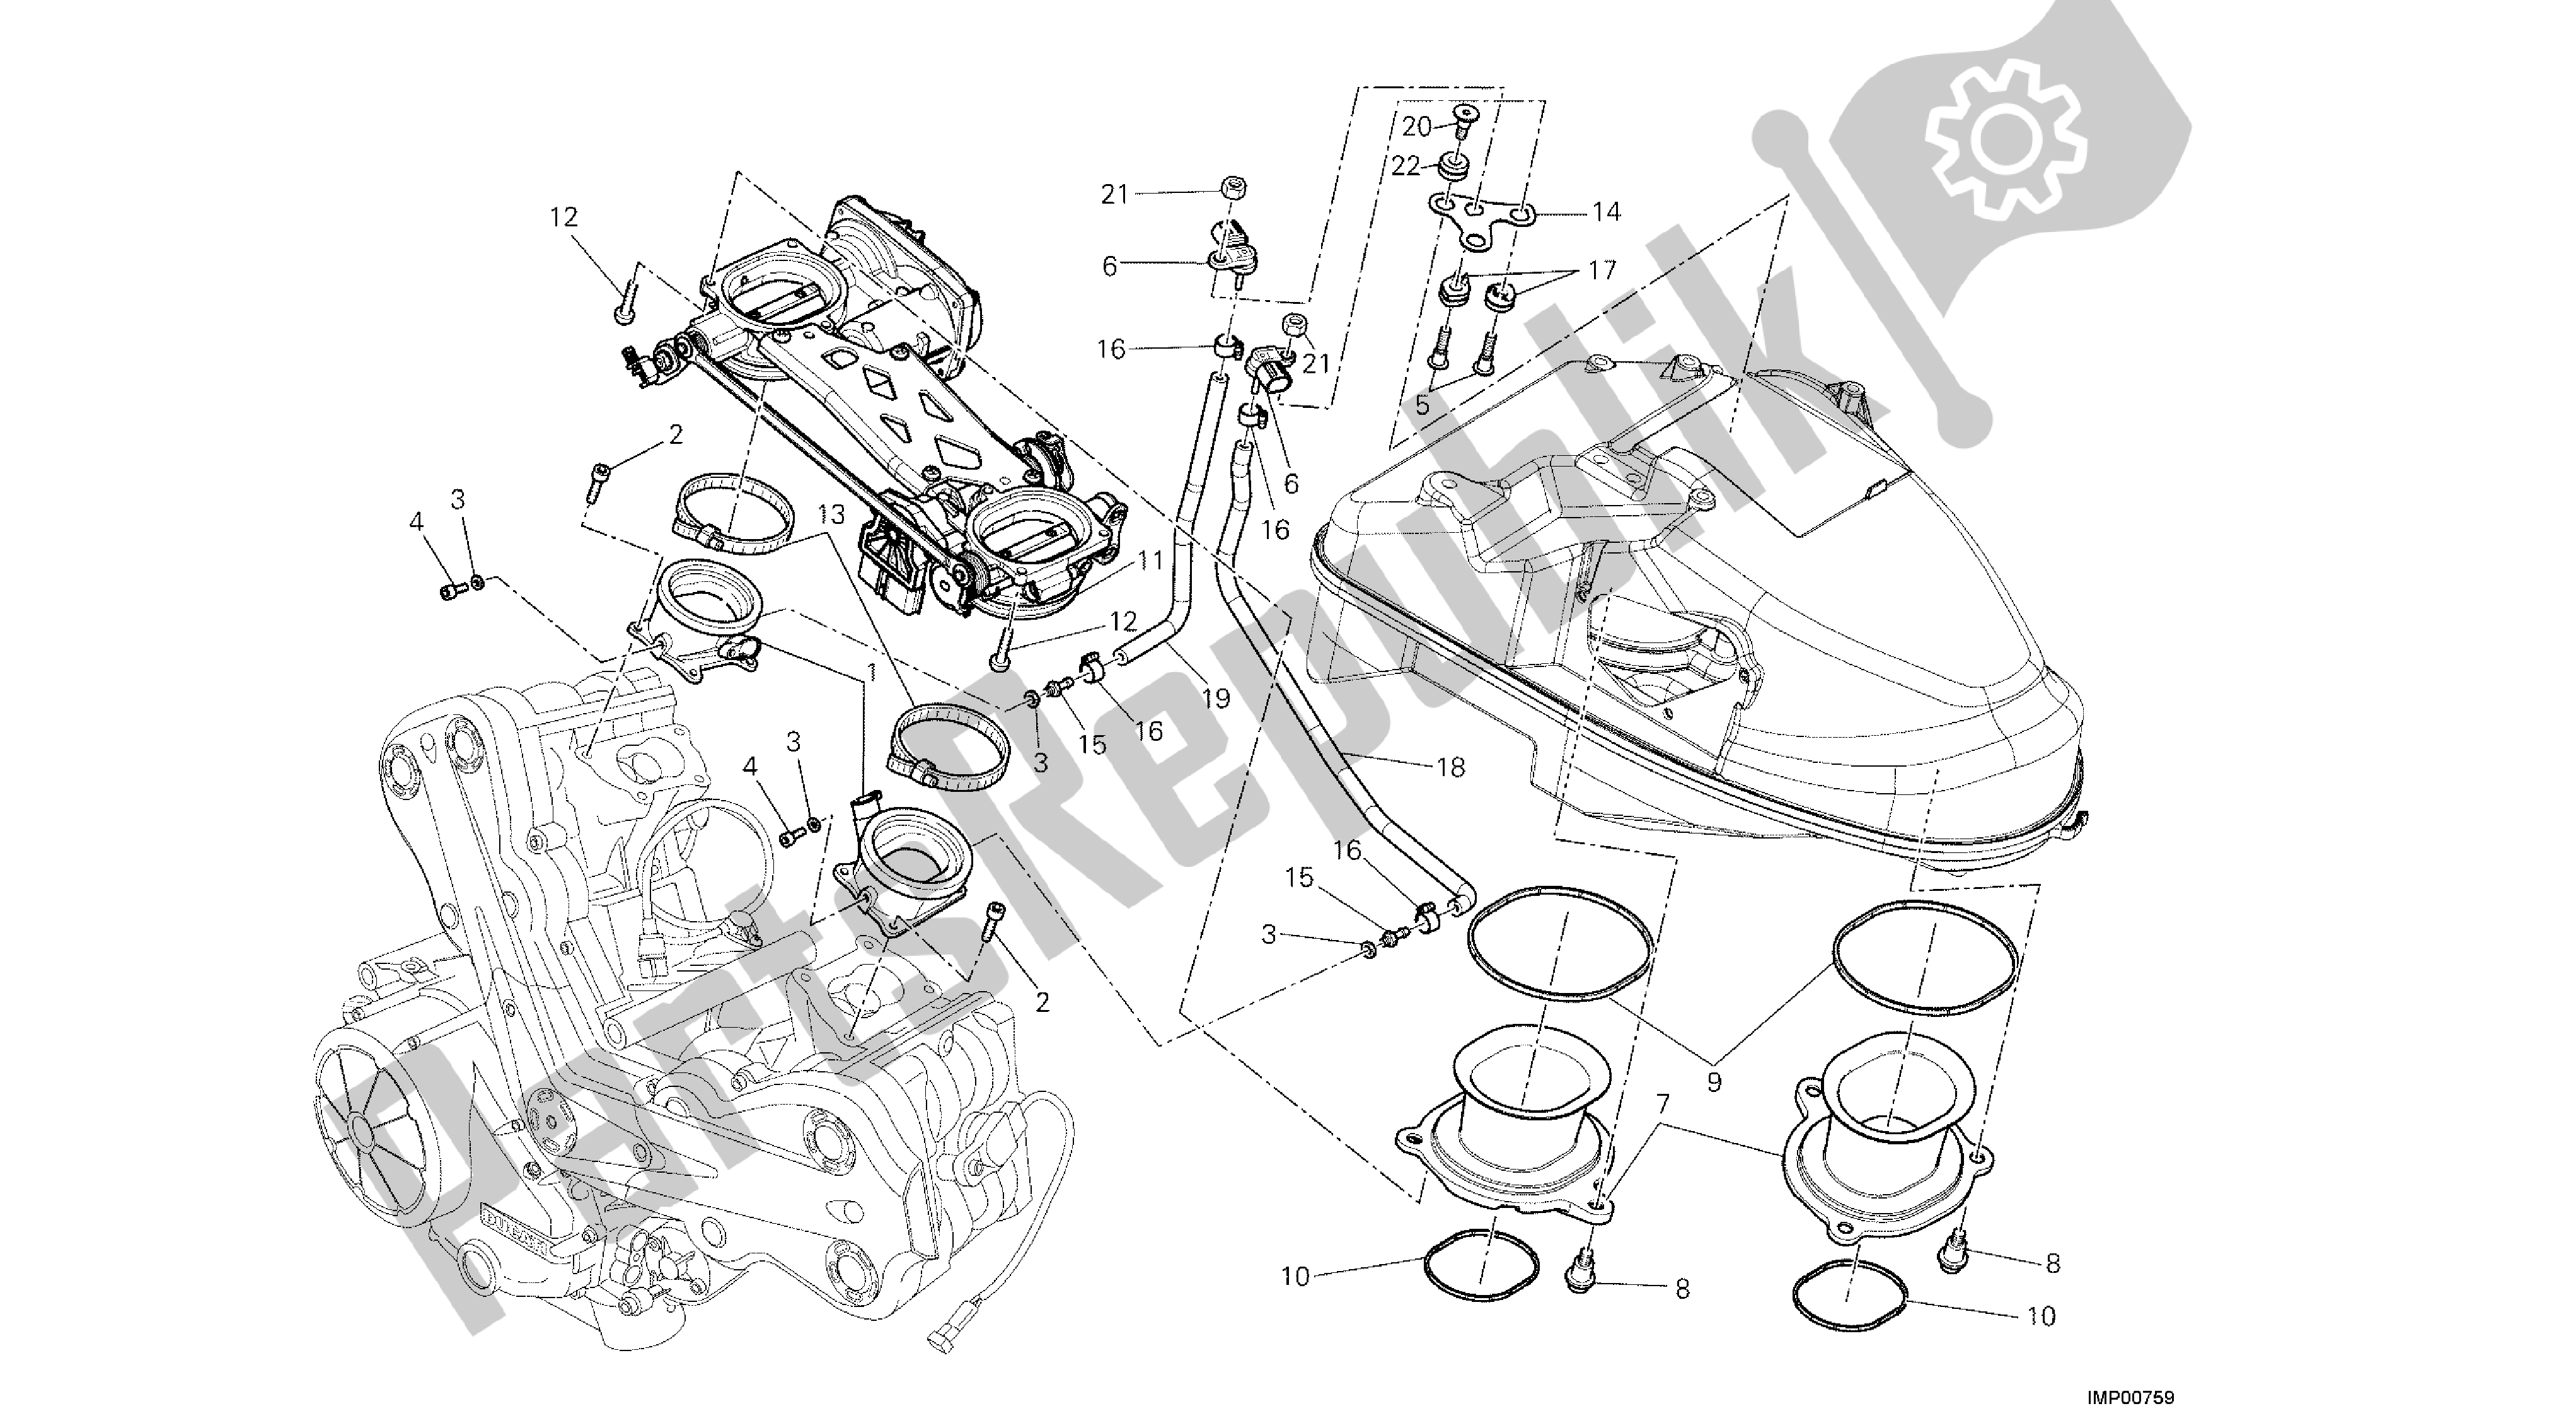 Alle onderdelen voor de Tekening 017 - Gasklephuis [mod: Dvl; Xst: Aus, B Ra, Eur, Fra, Jap] Groep Engi Ne van de Ducati Diavel 1200 2013